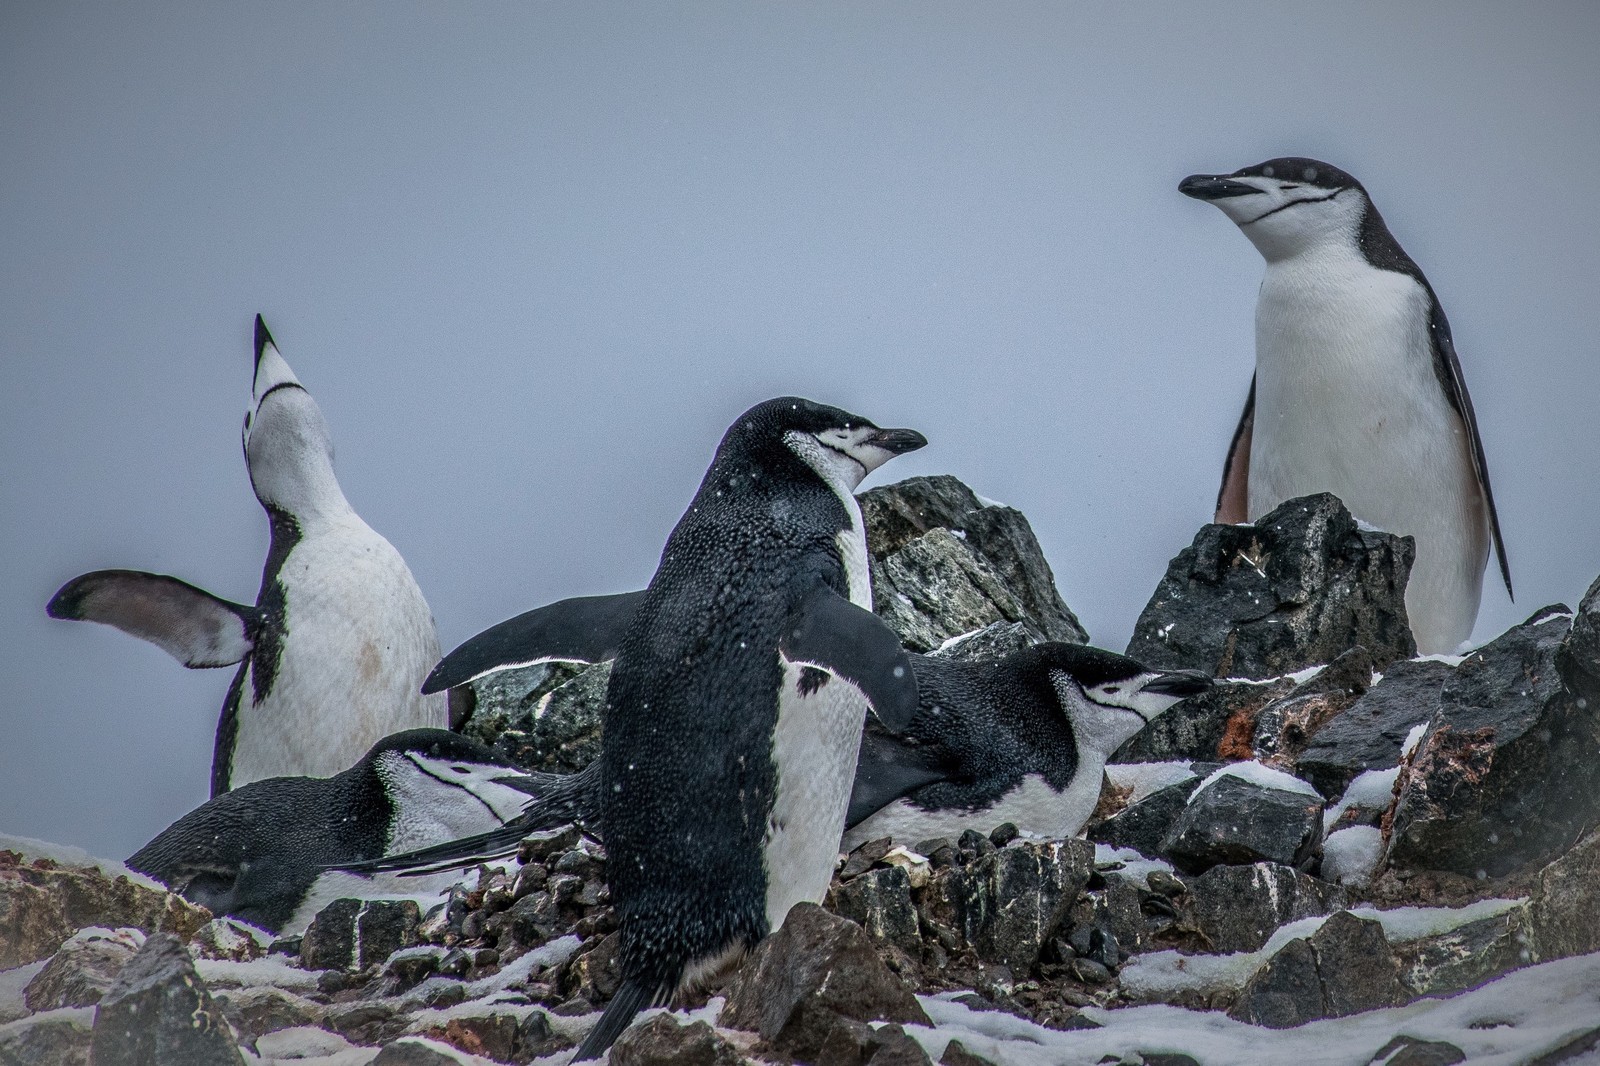 Какой тип развития характерен для субантарктического пингвина. Антарктический Пингвин. Субантарктический Пингвин в Антарктиде. Пингвины Тихого океана. Антарктида пингвины Адели.